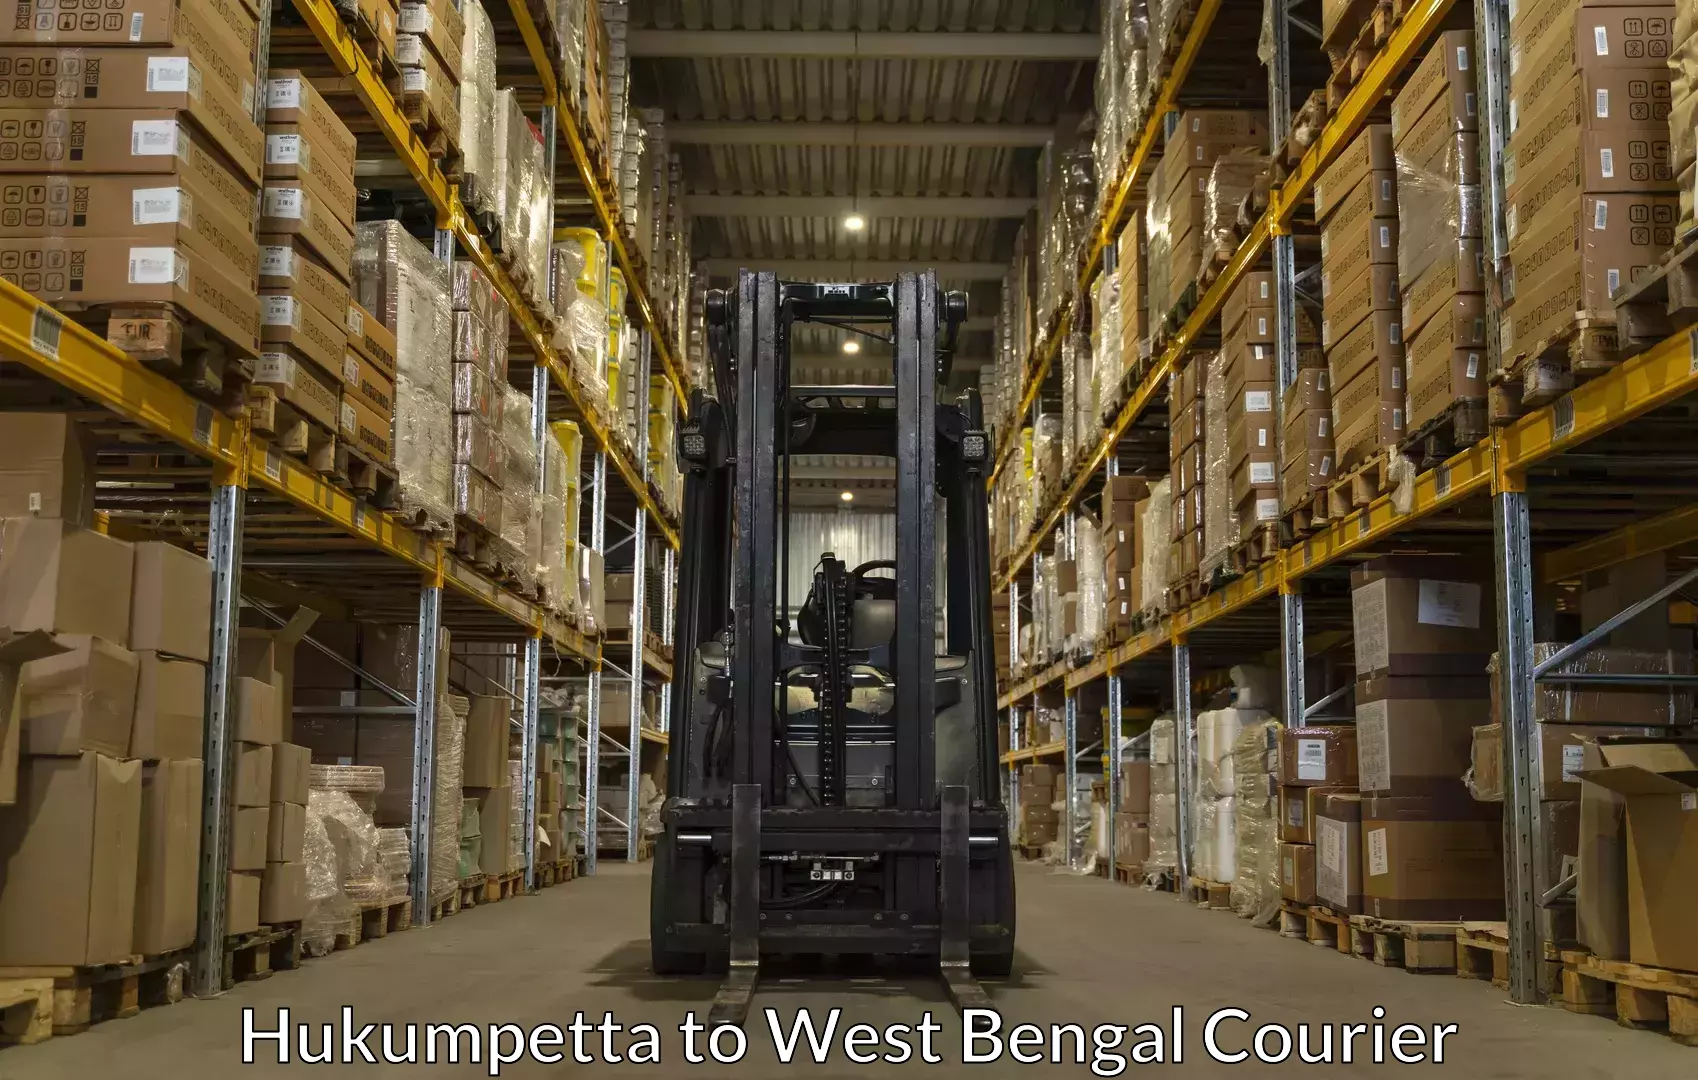 Expert goods movers in Hukumpetta to West Bengal